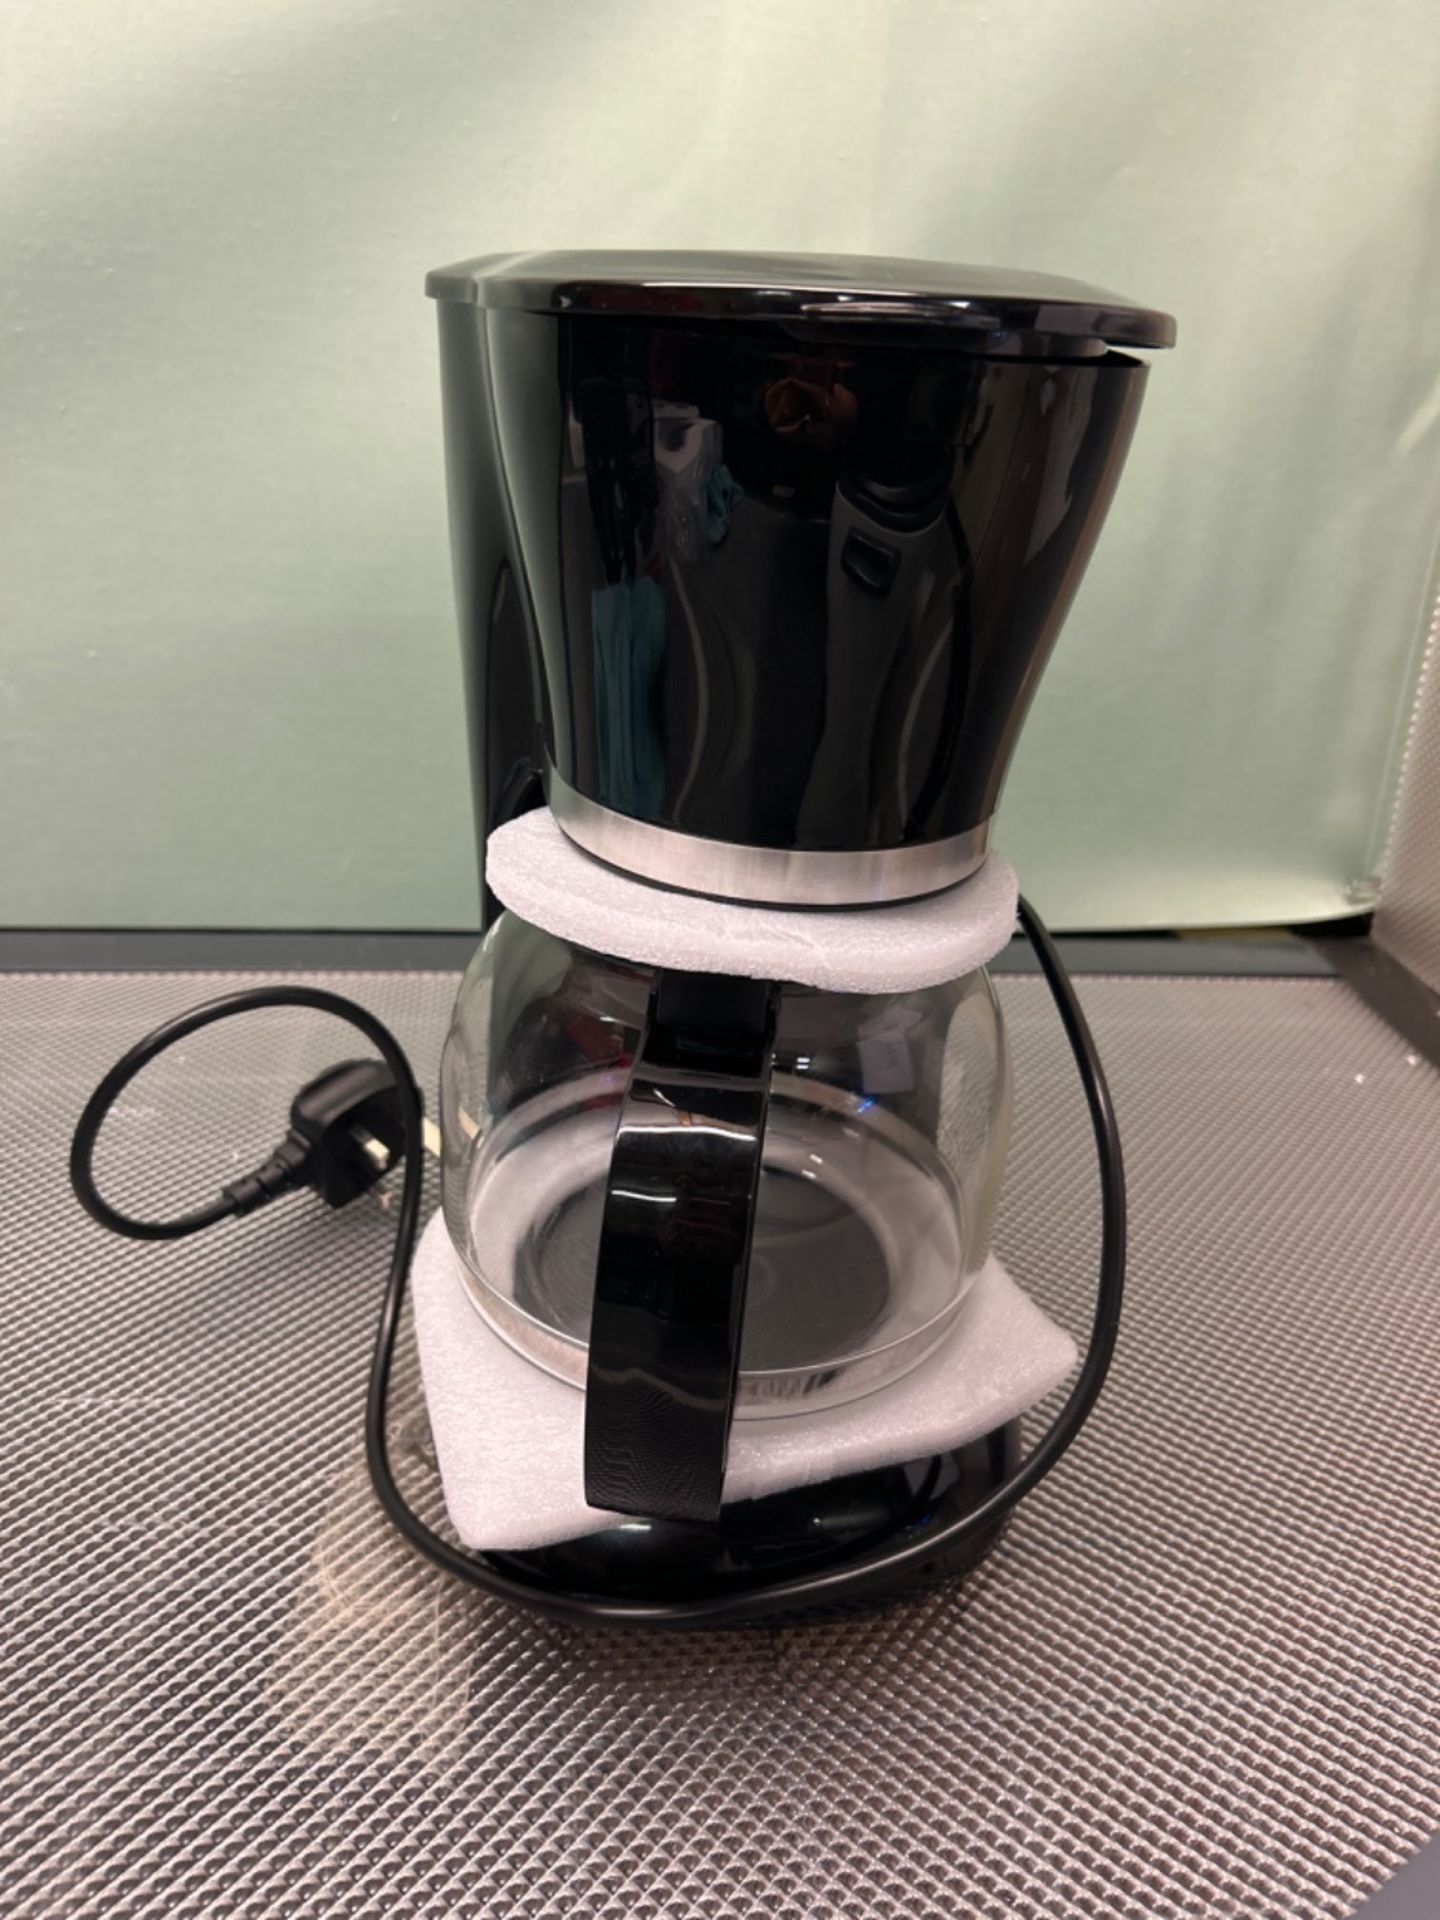 GEEPAS 1.5L Filter Coffee Machine | 800W Coffee Maker for Instant Coffee, Espresso, Macchiato & Mor - Image 3 of 3